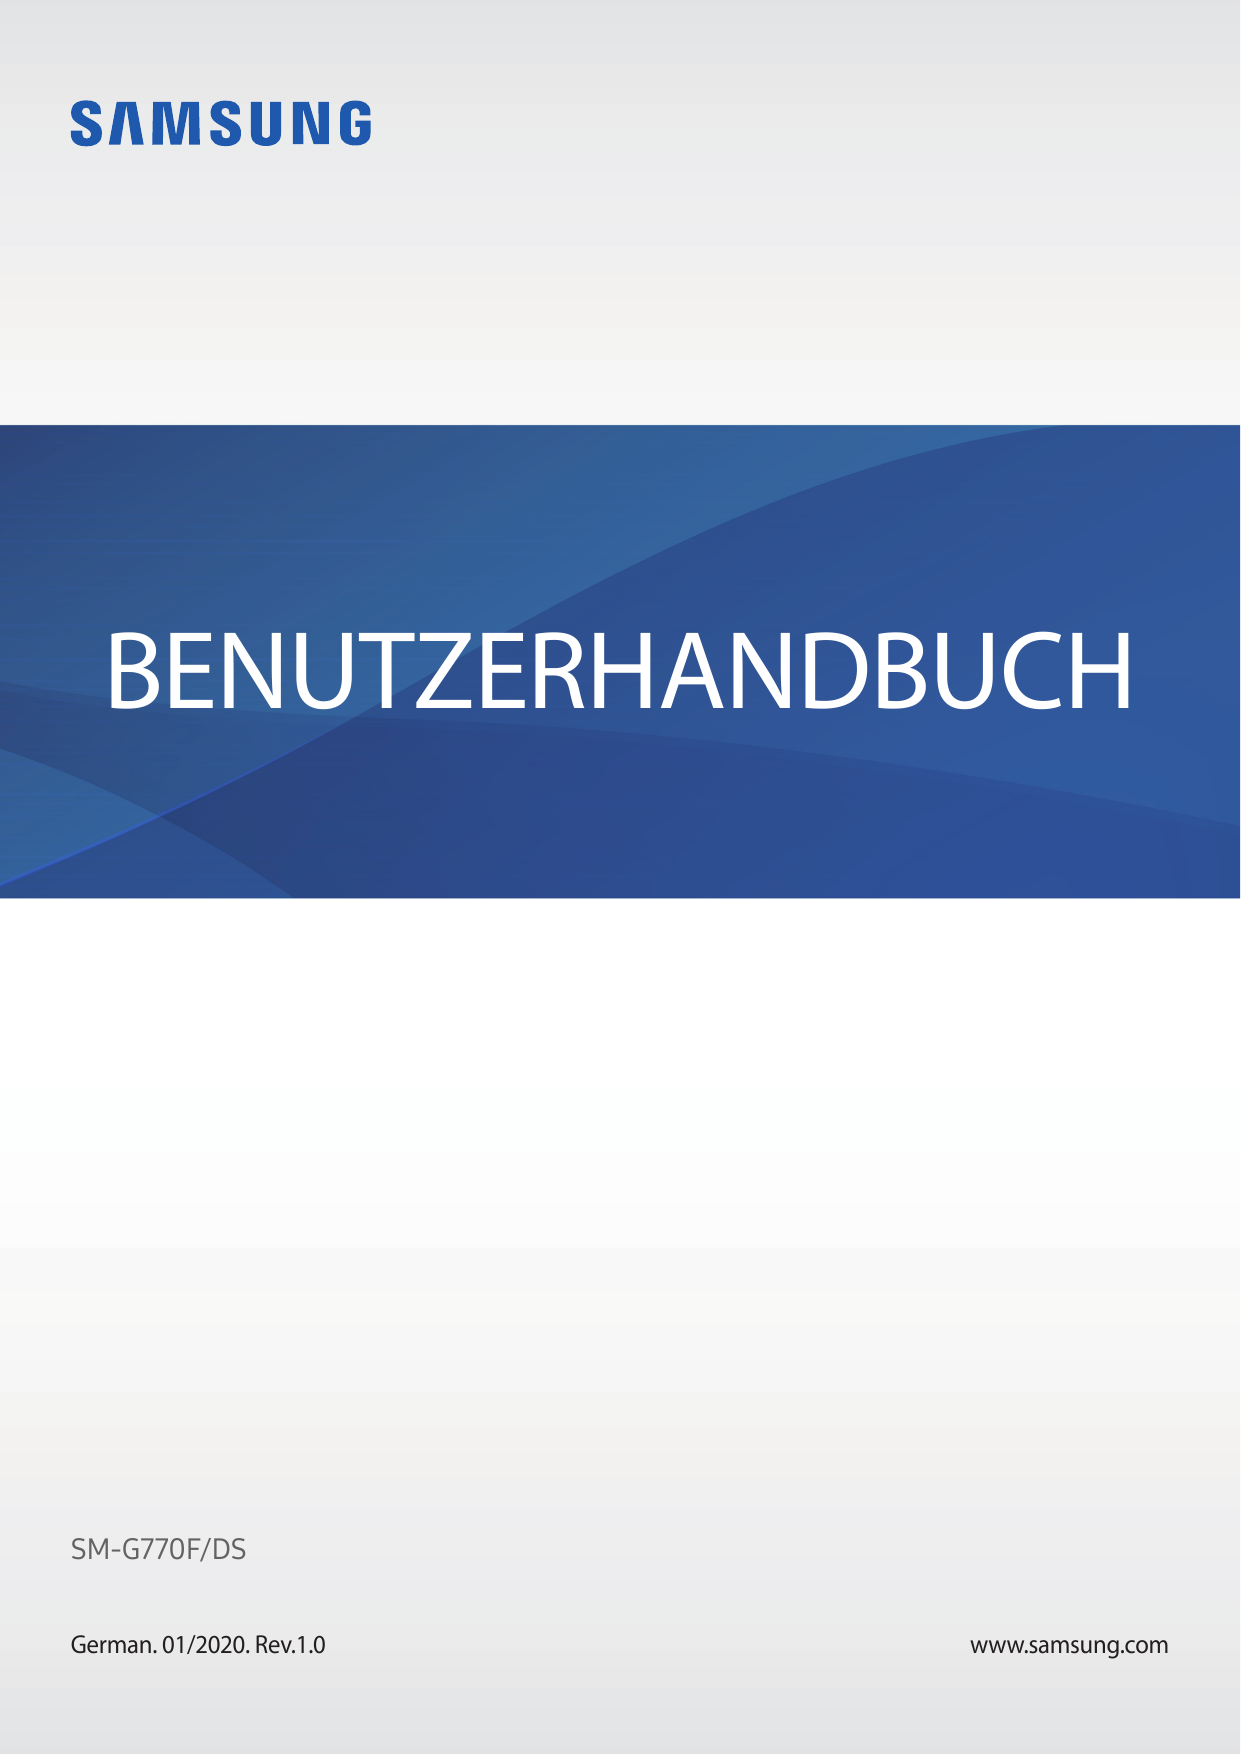 BENUTZERHANDBUCHSM-G770F/DSGerman. 01/2020. Rev.1.0www.samsung.com